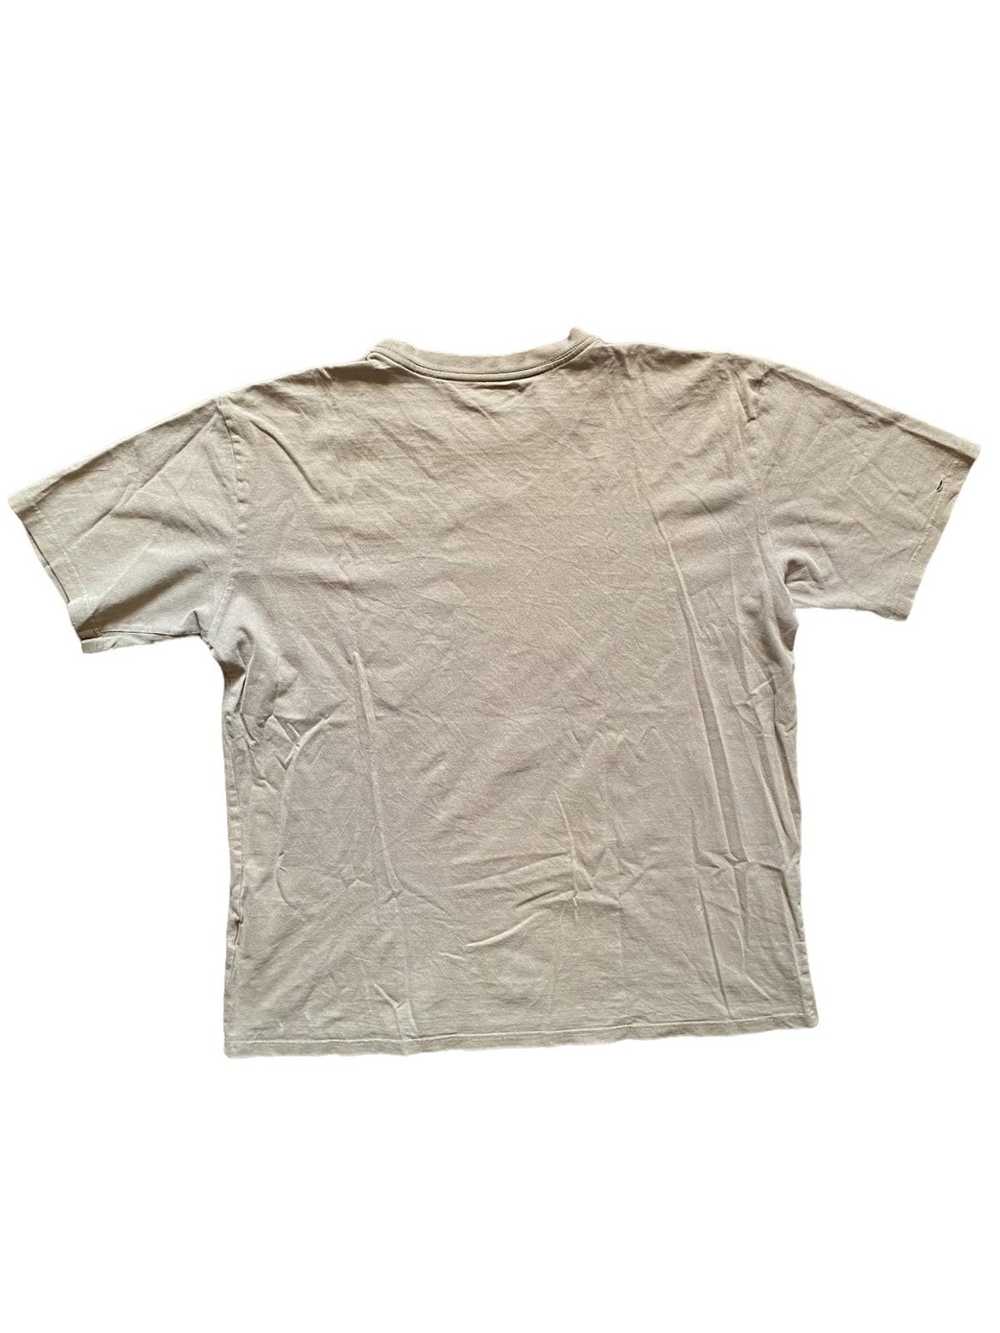 Bass Pro Shop T-Shirt Size XL White Fishing American Tradition Flag USA  Vintage